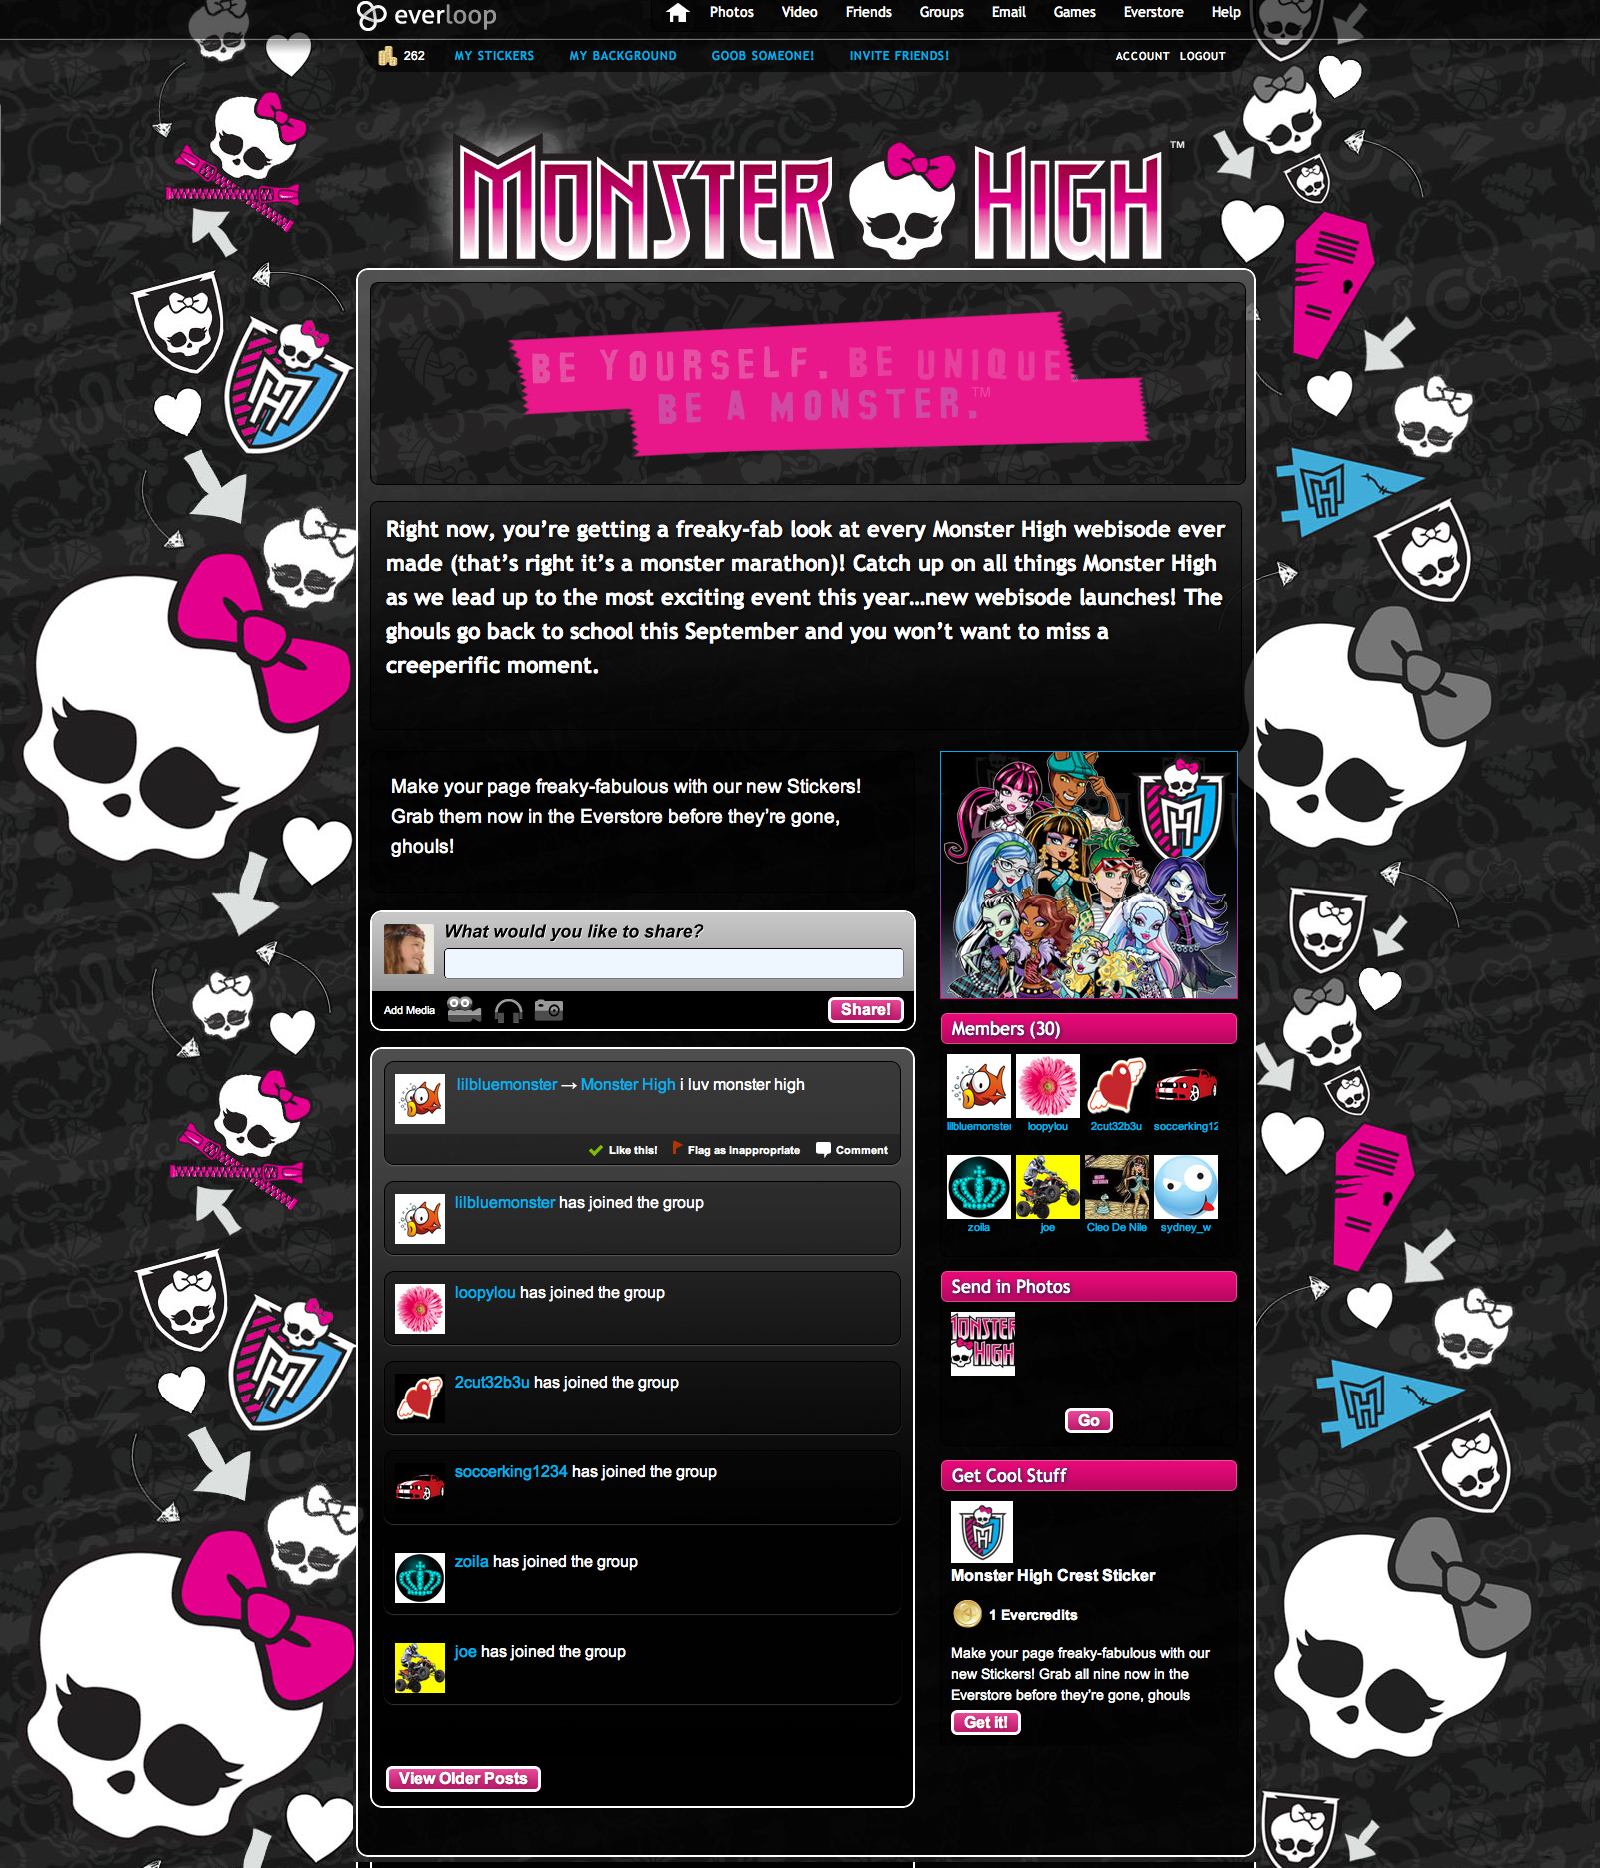 Monster High Image